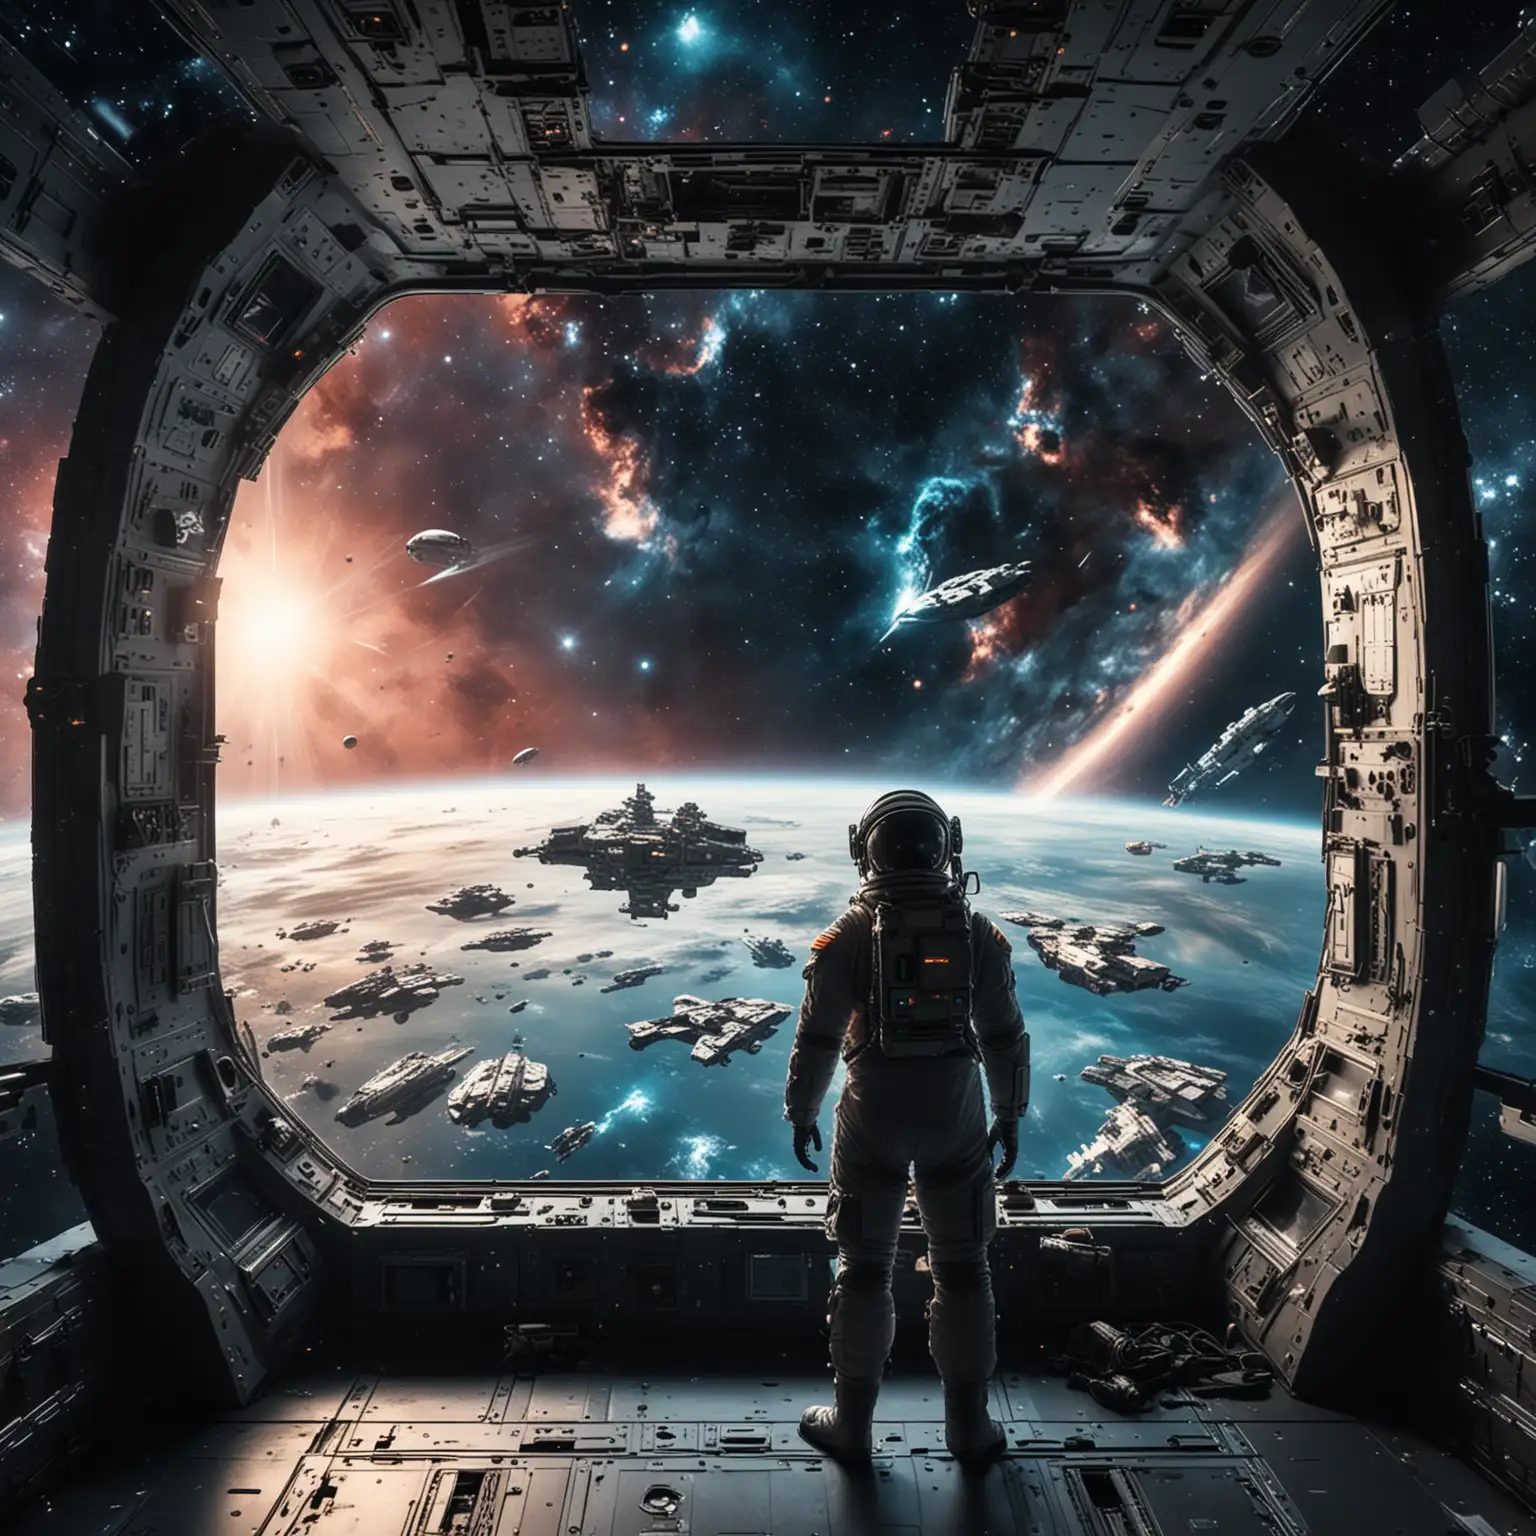 Astronaut in Command Center Observing Fleet in Nebula